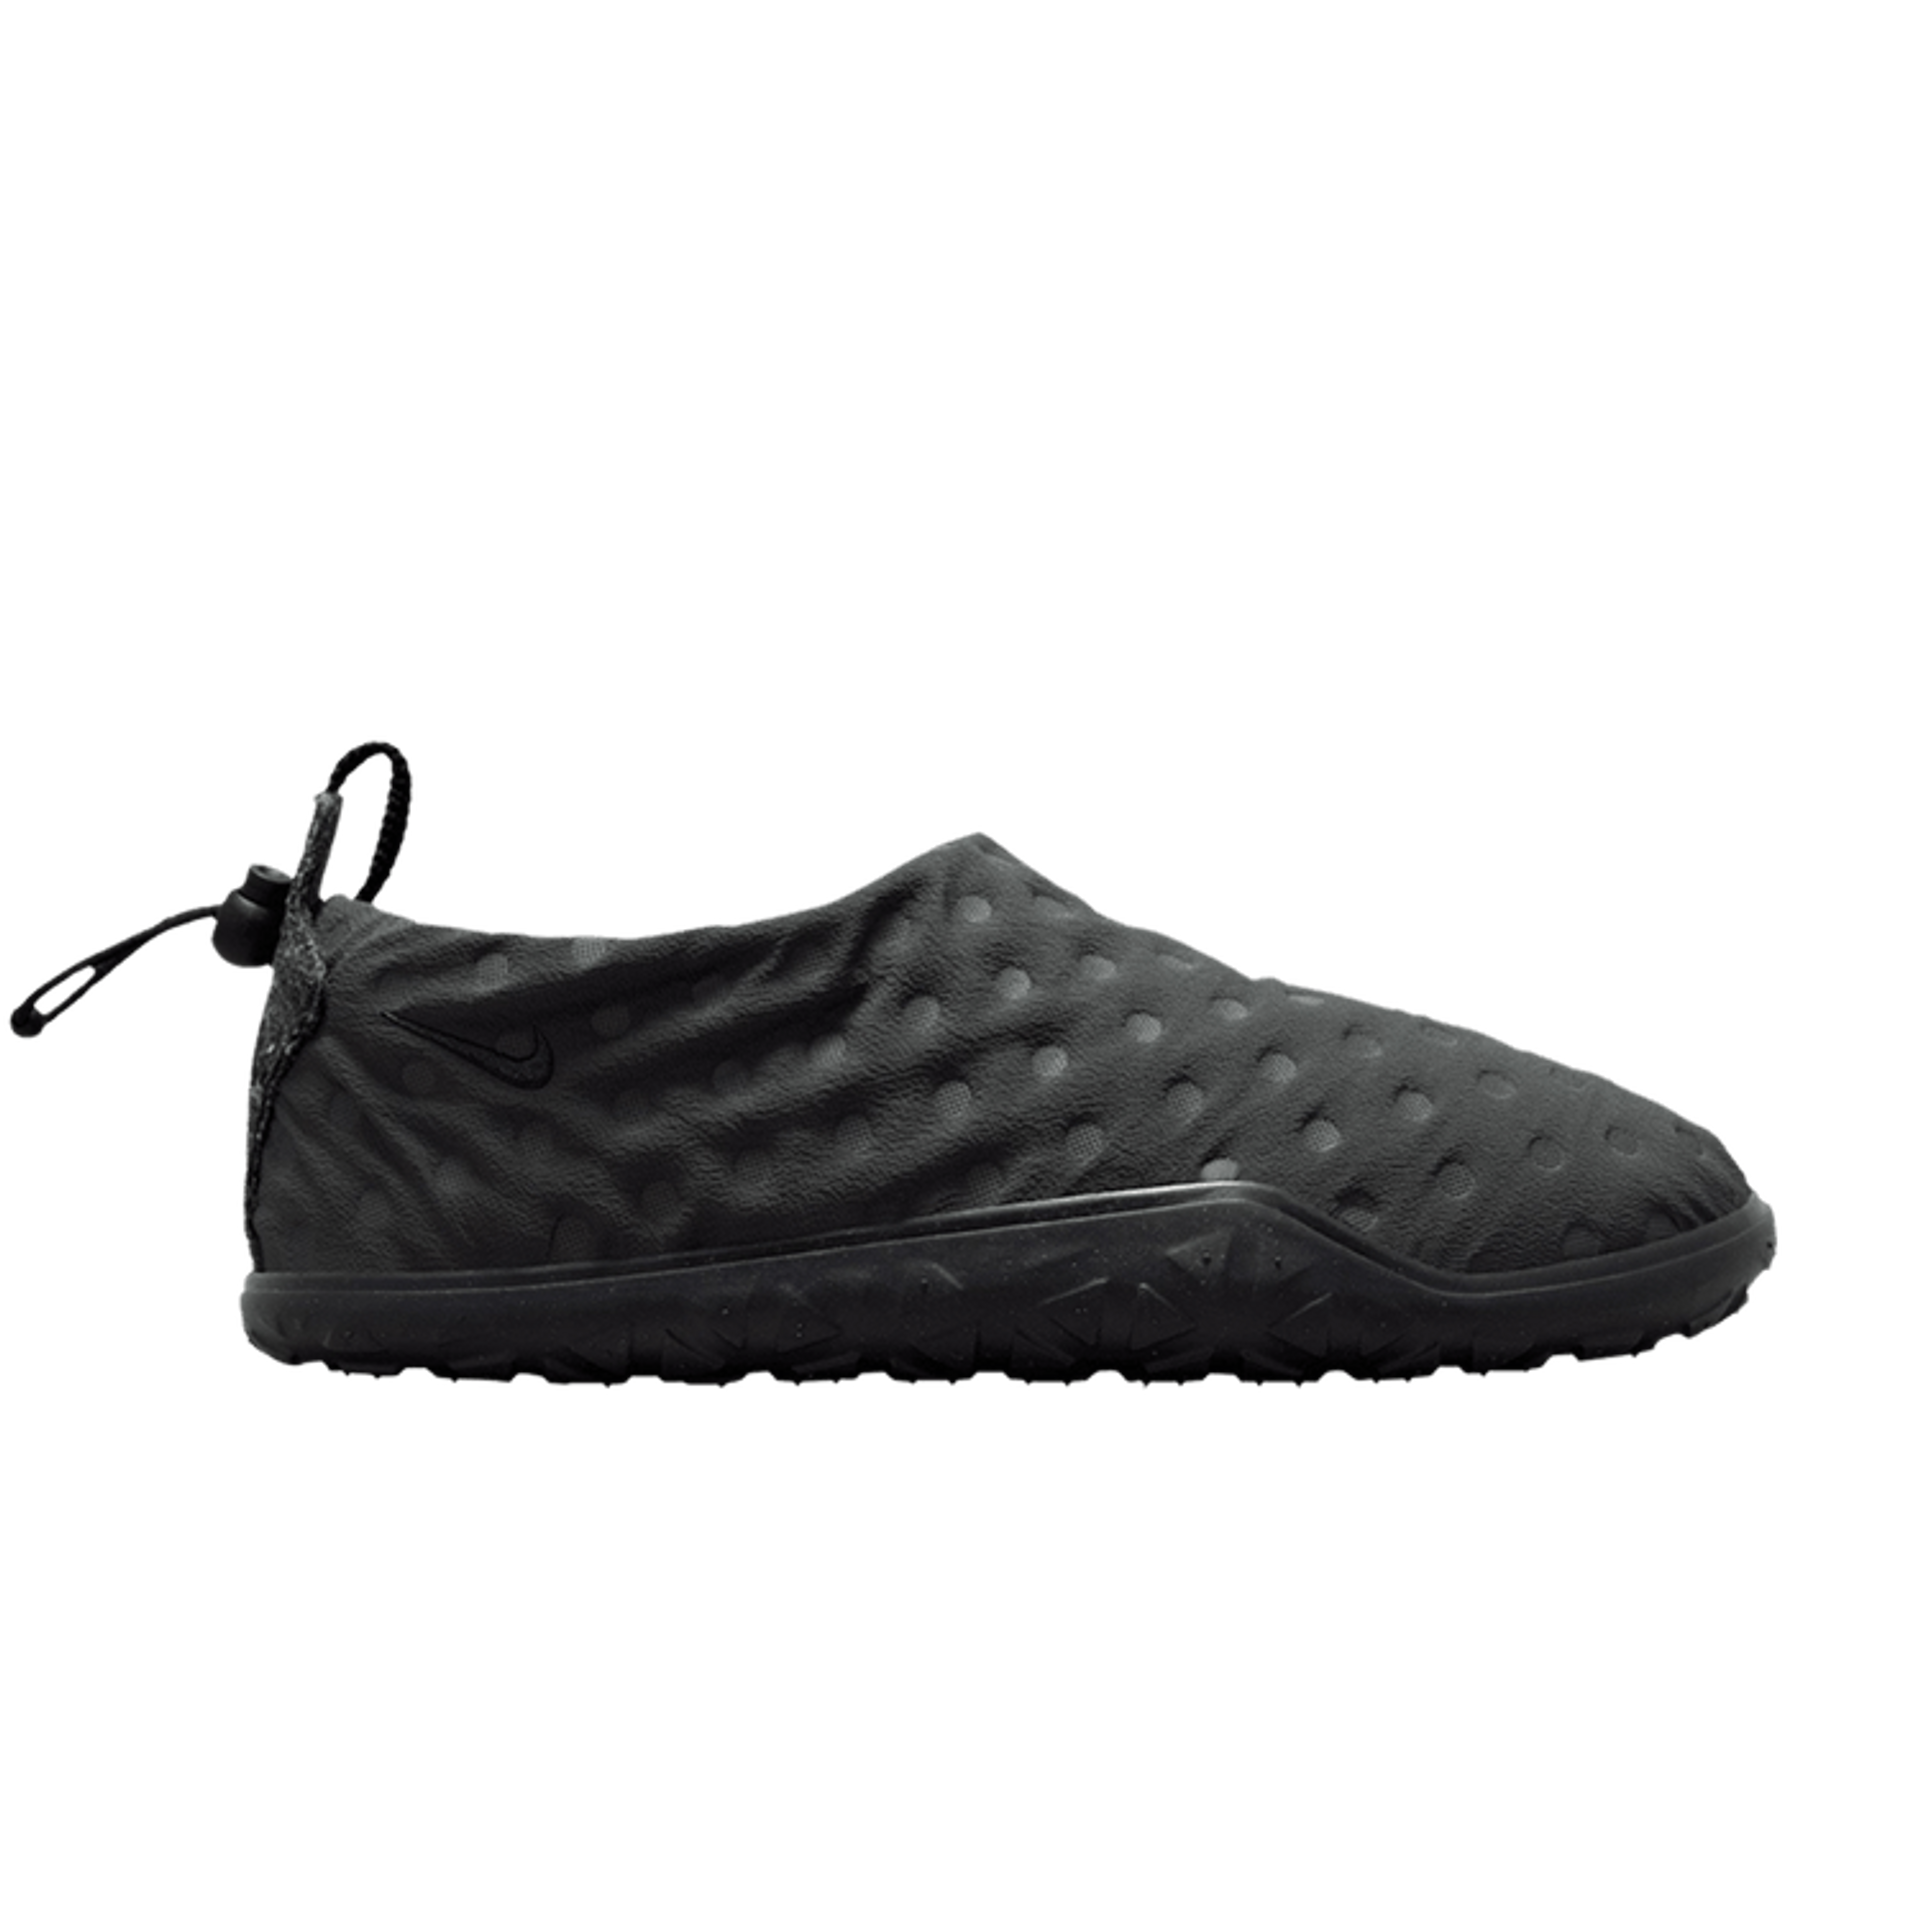 Nike ACG Moc 'Anthracite' - DQ6453 001 | Ox Street